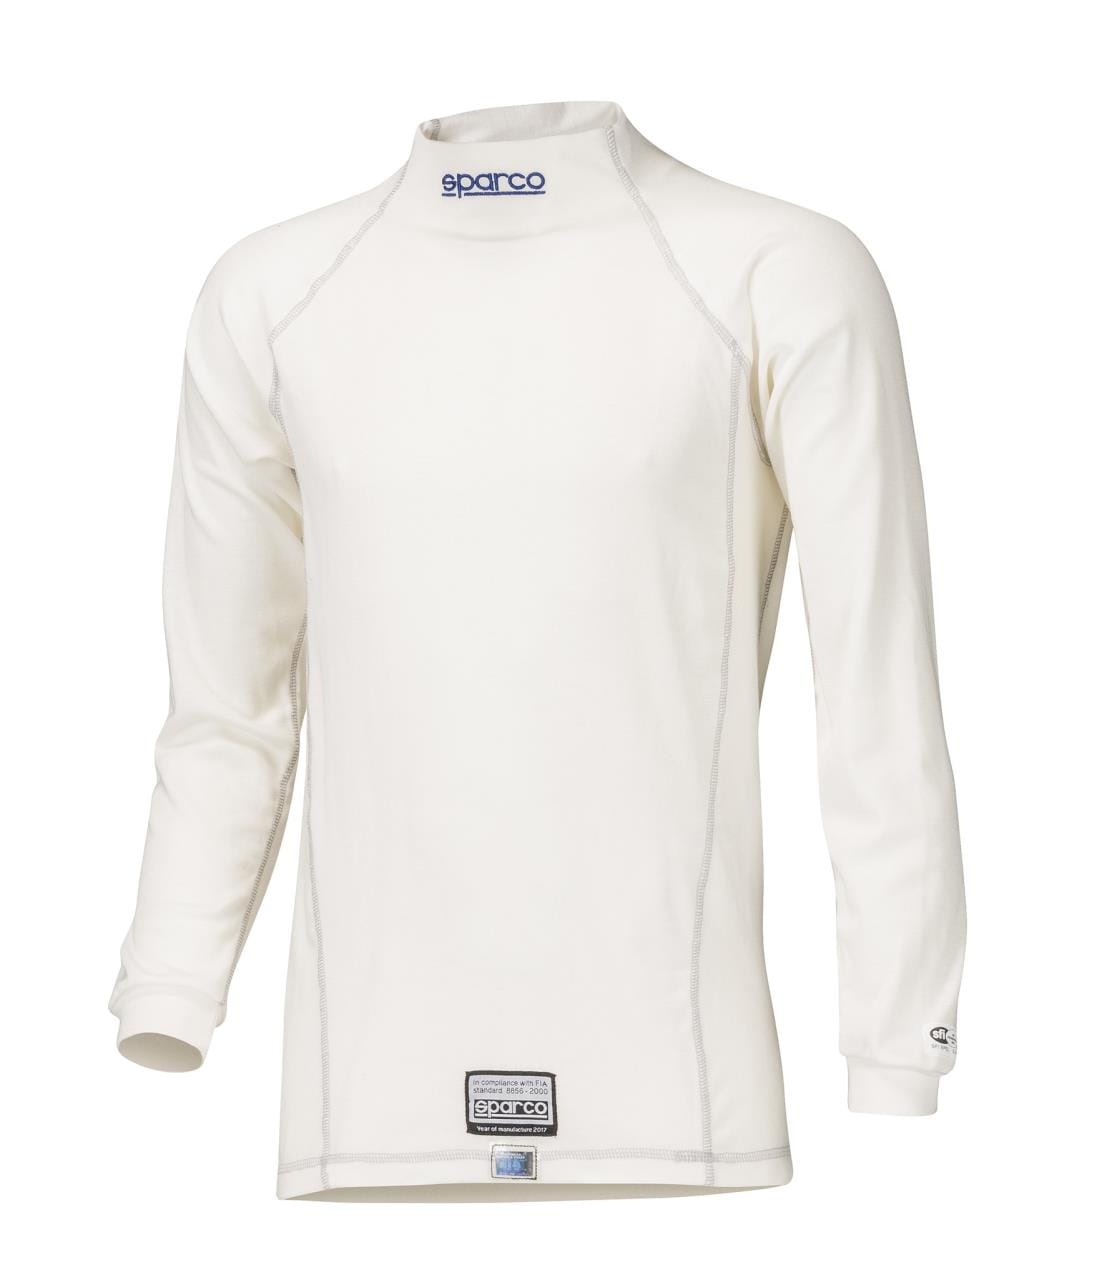 Undertøj Sparco Sweater Guard RW-3 FIA H